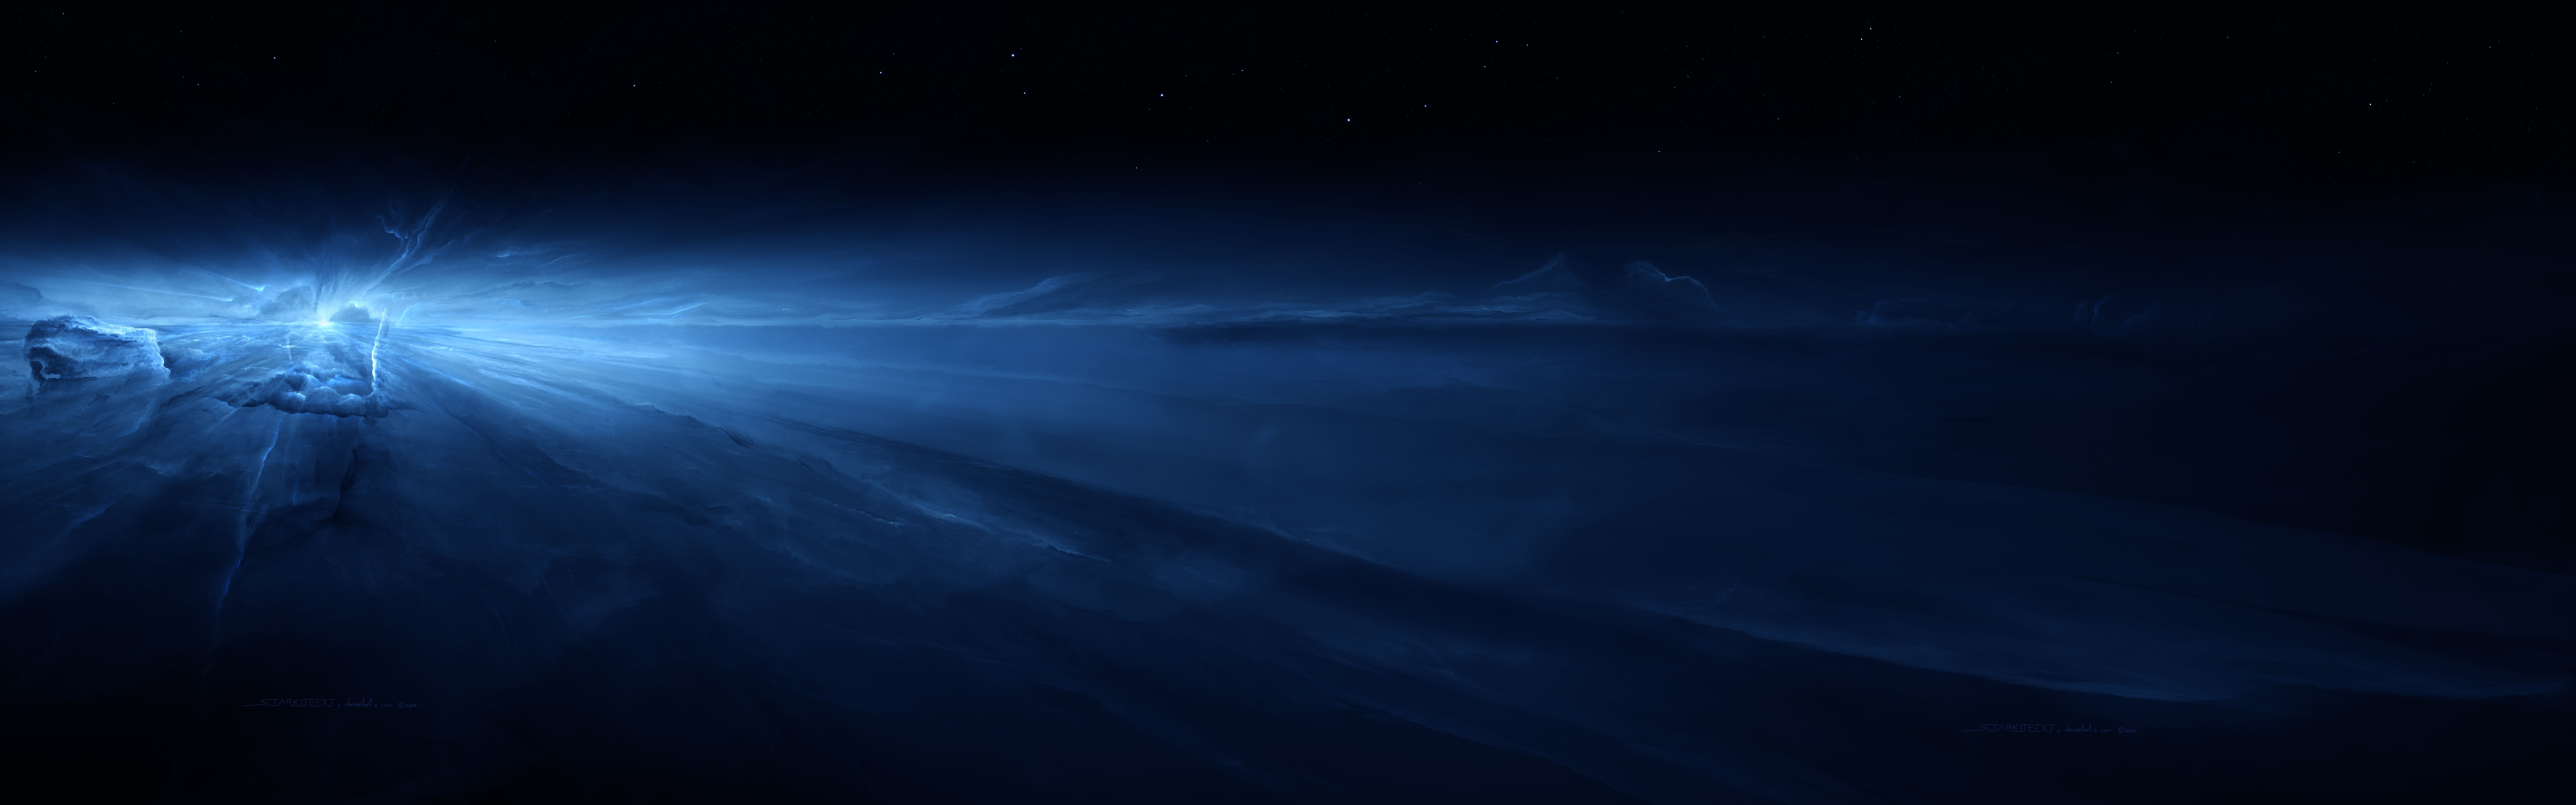 Neptune Skies by Starkiteckt on DeviantArt